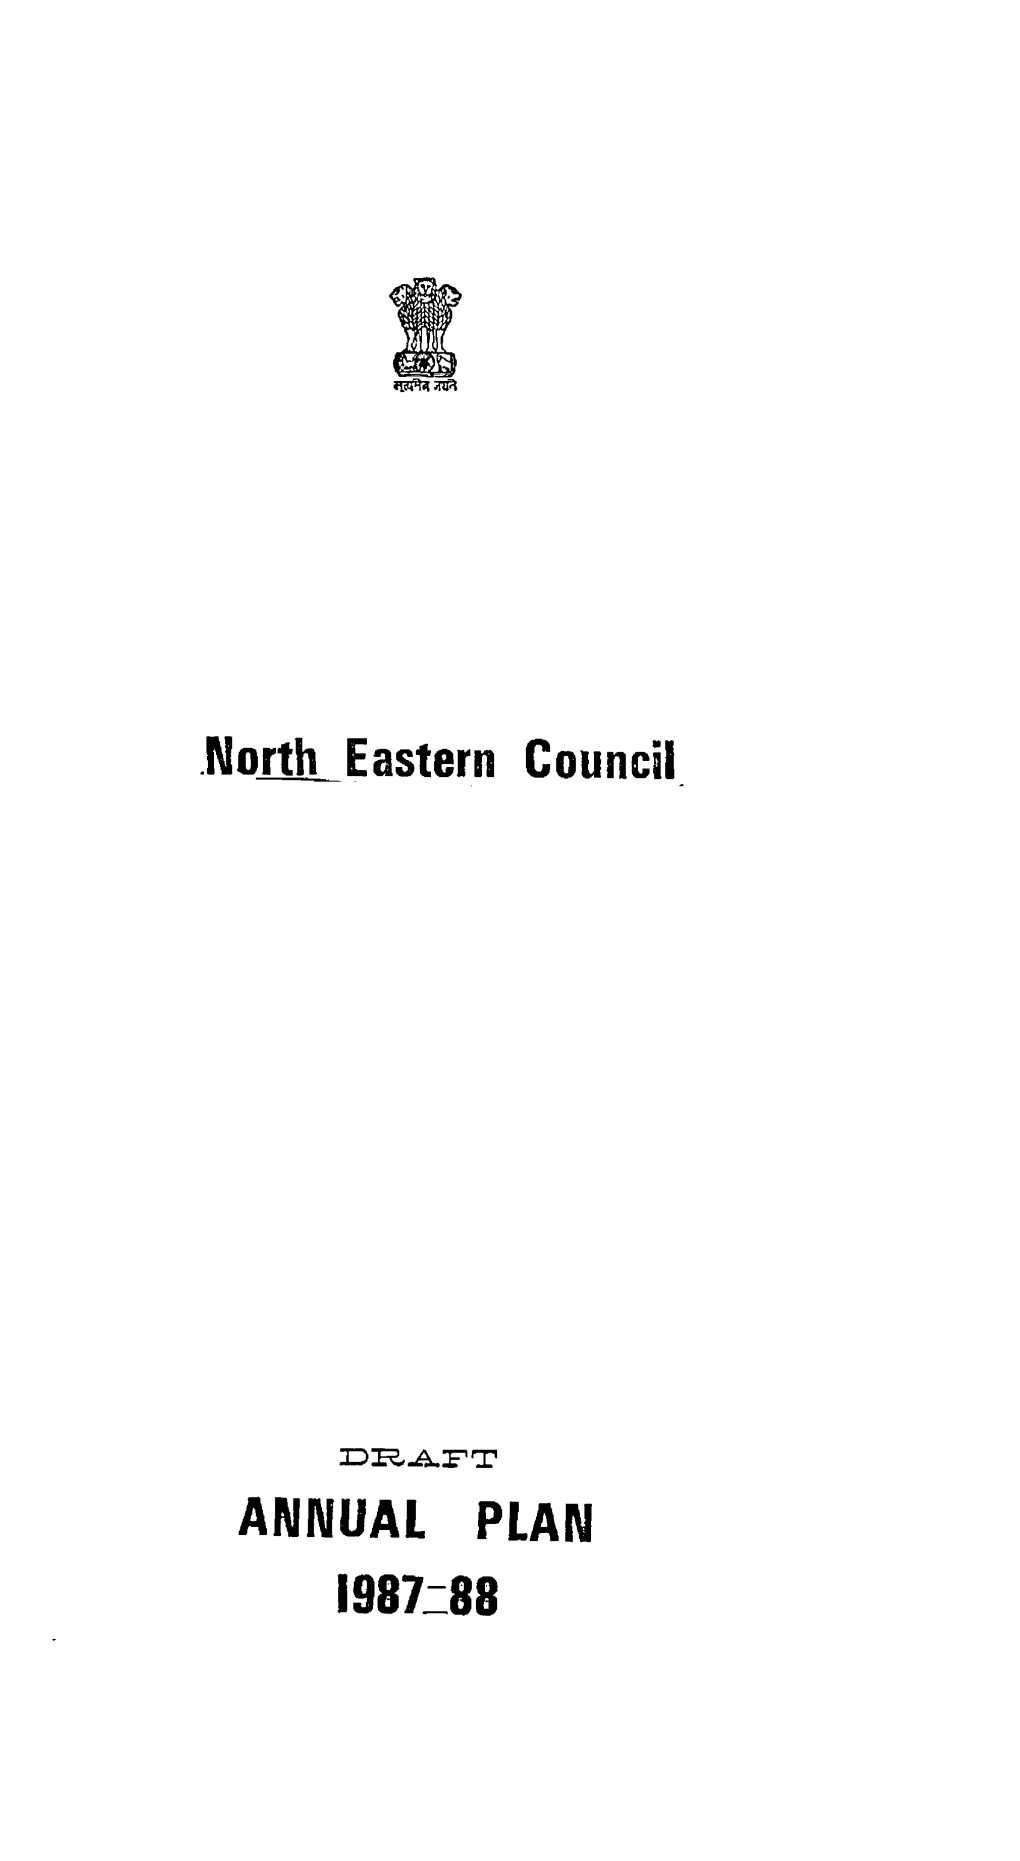 North Eastern Council ANNUAL PLAN